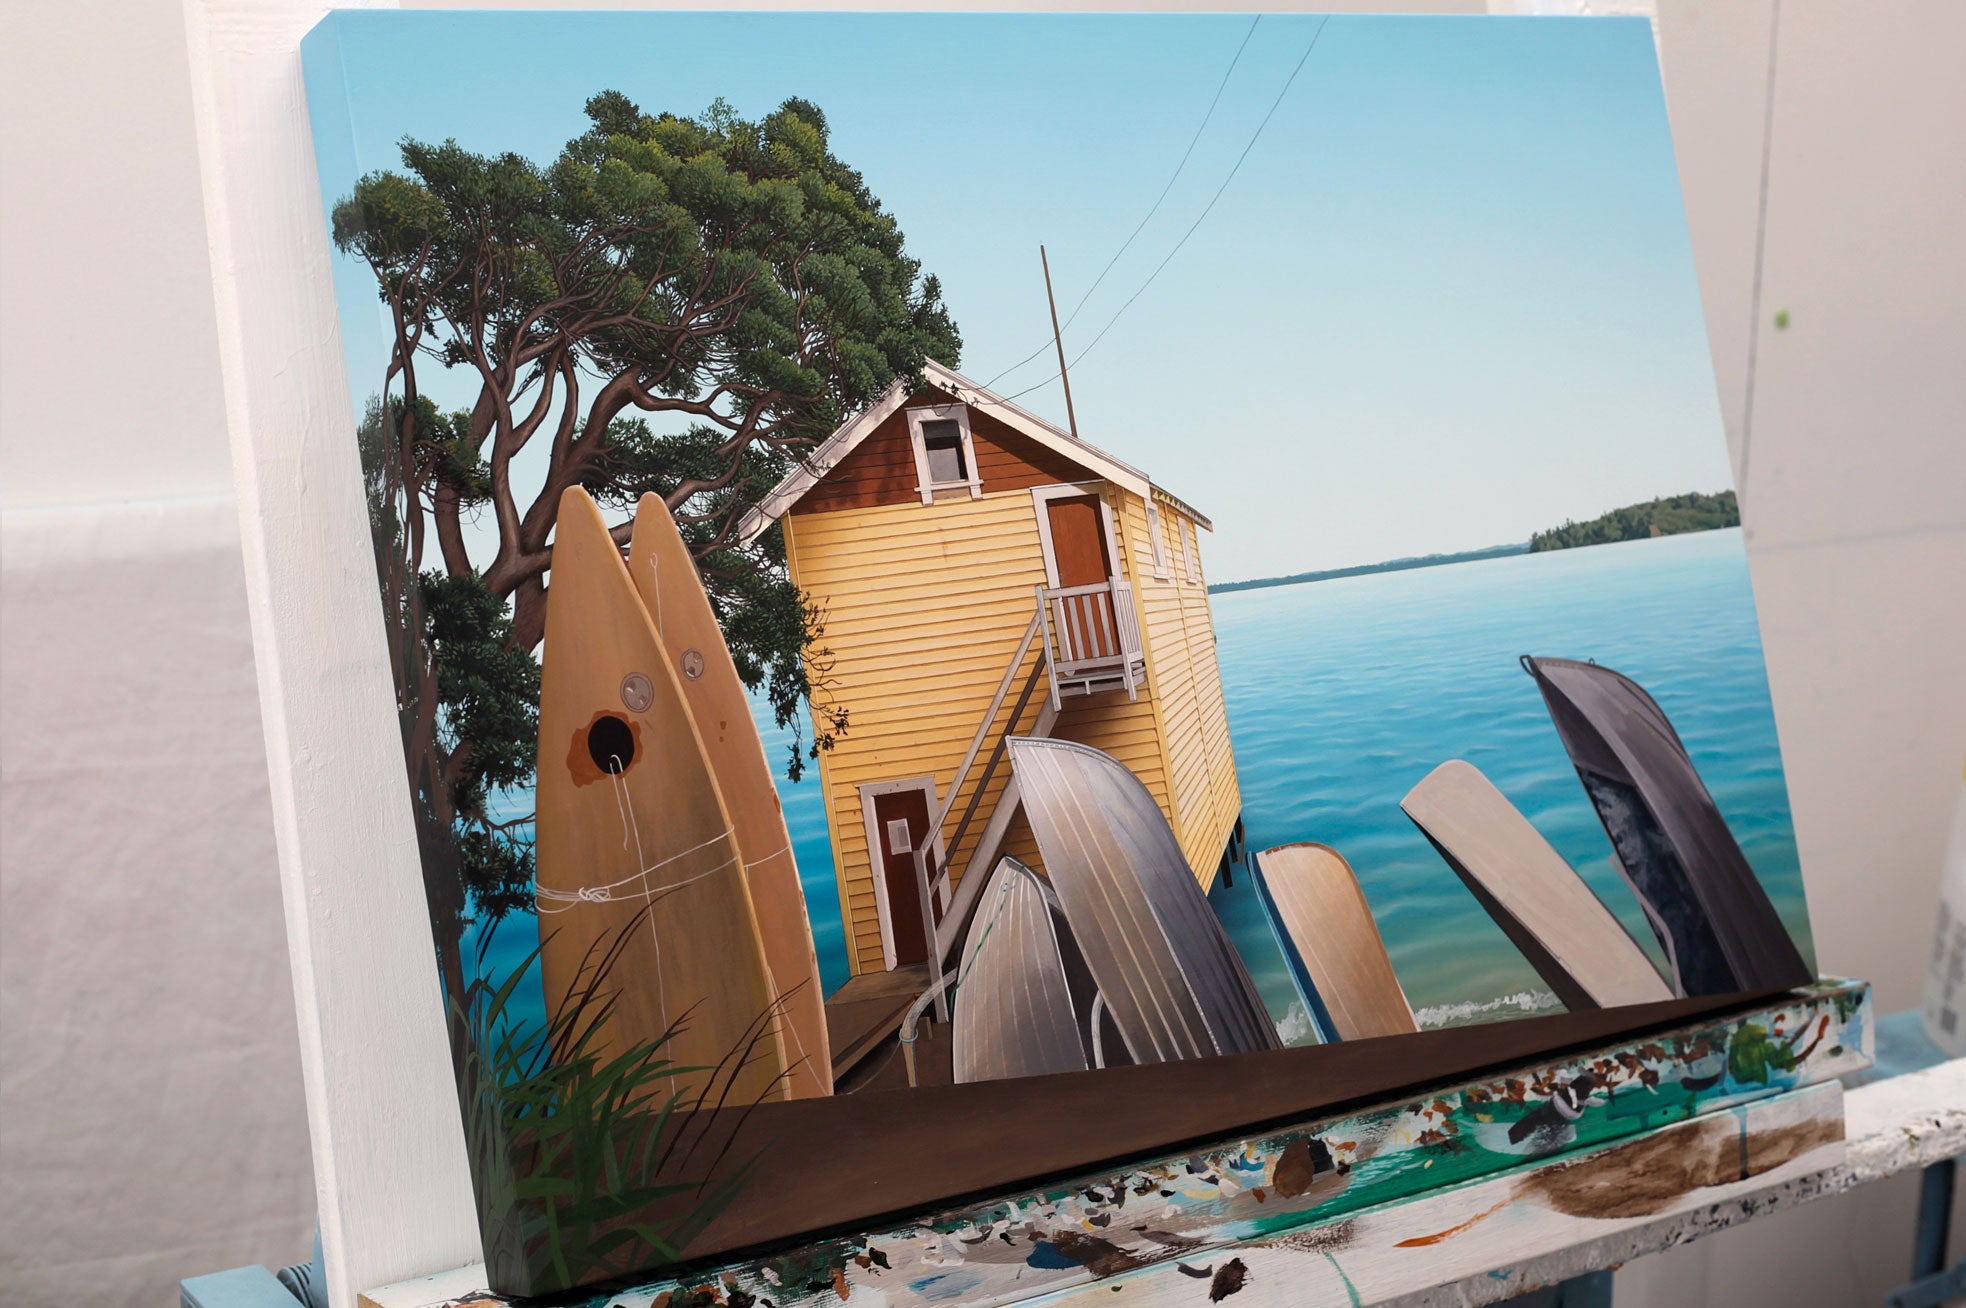 Herne Bay cruising club boathouse painting